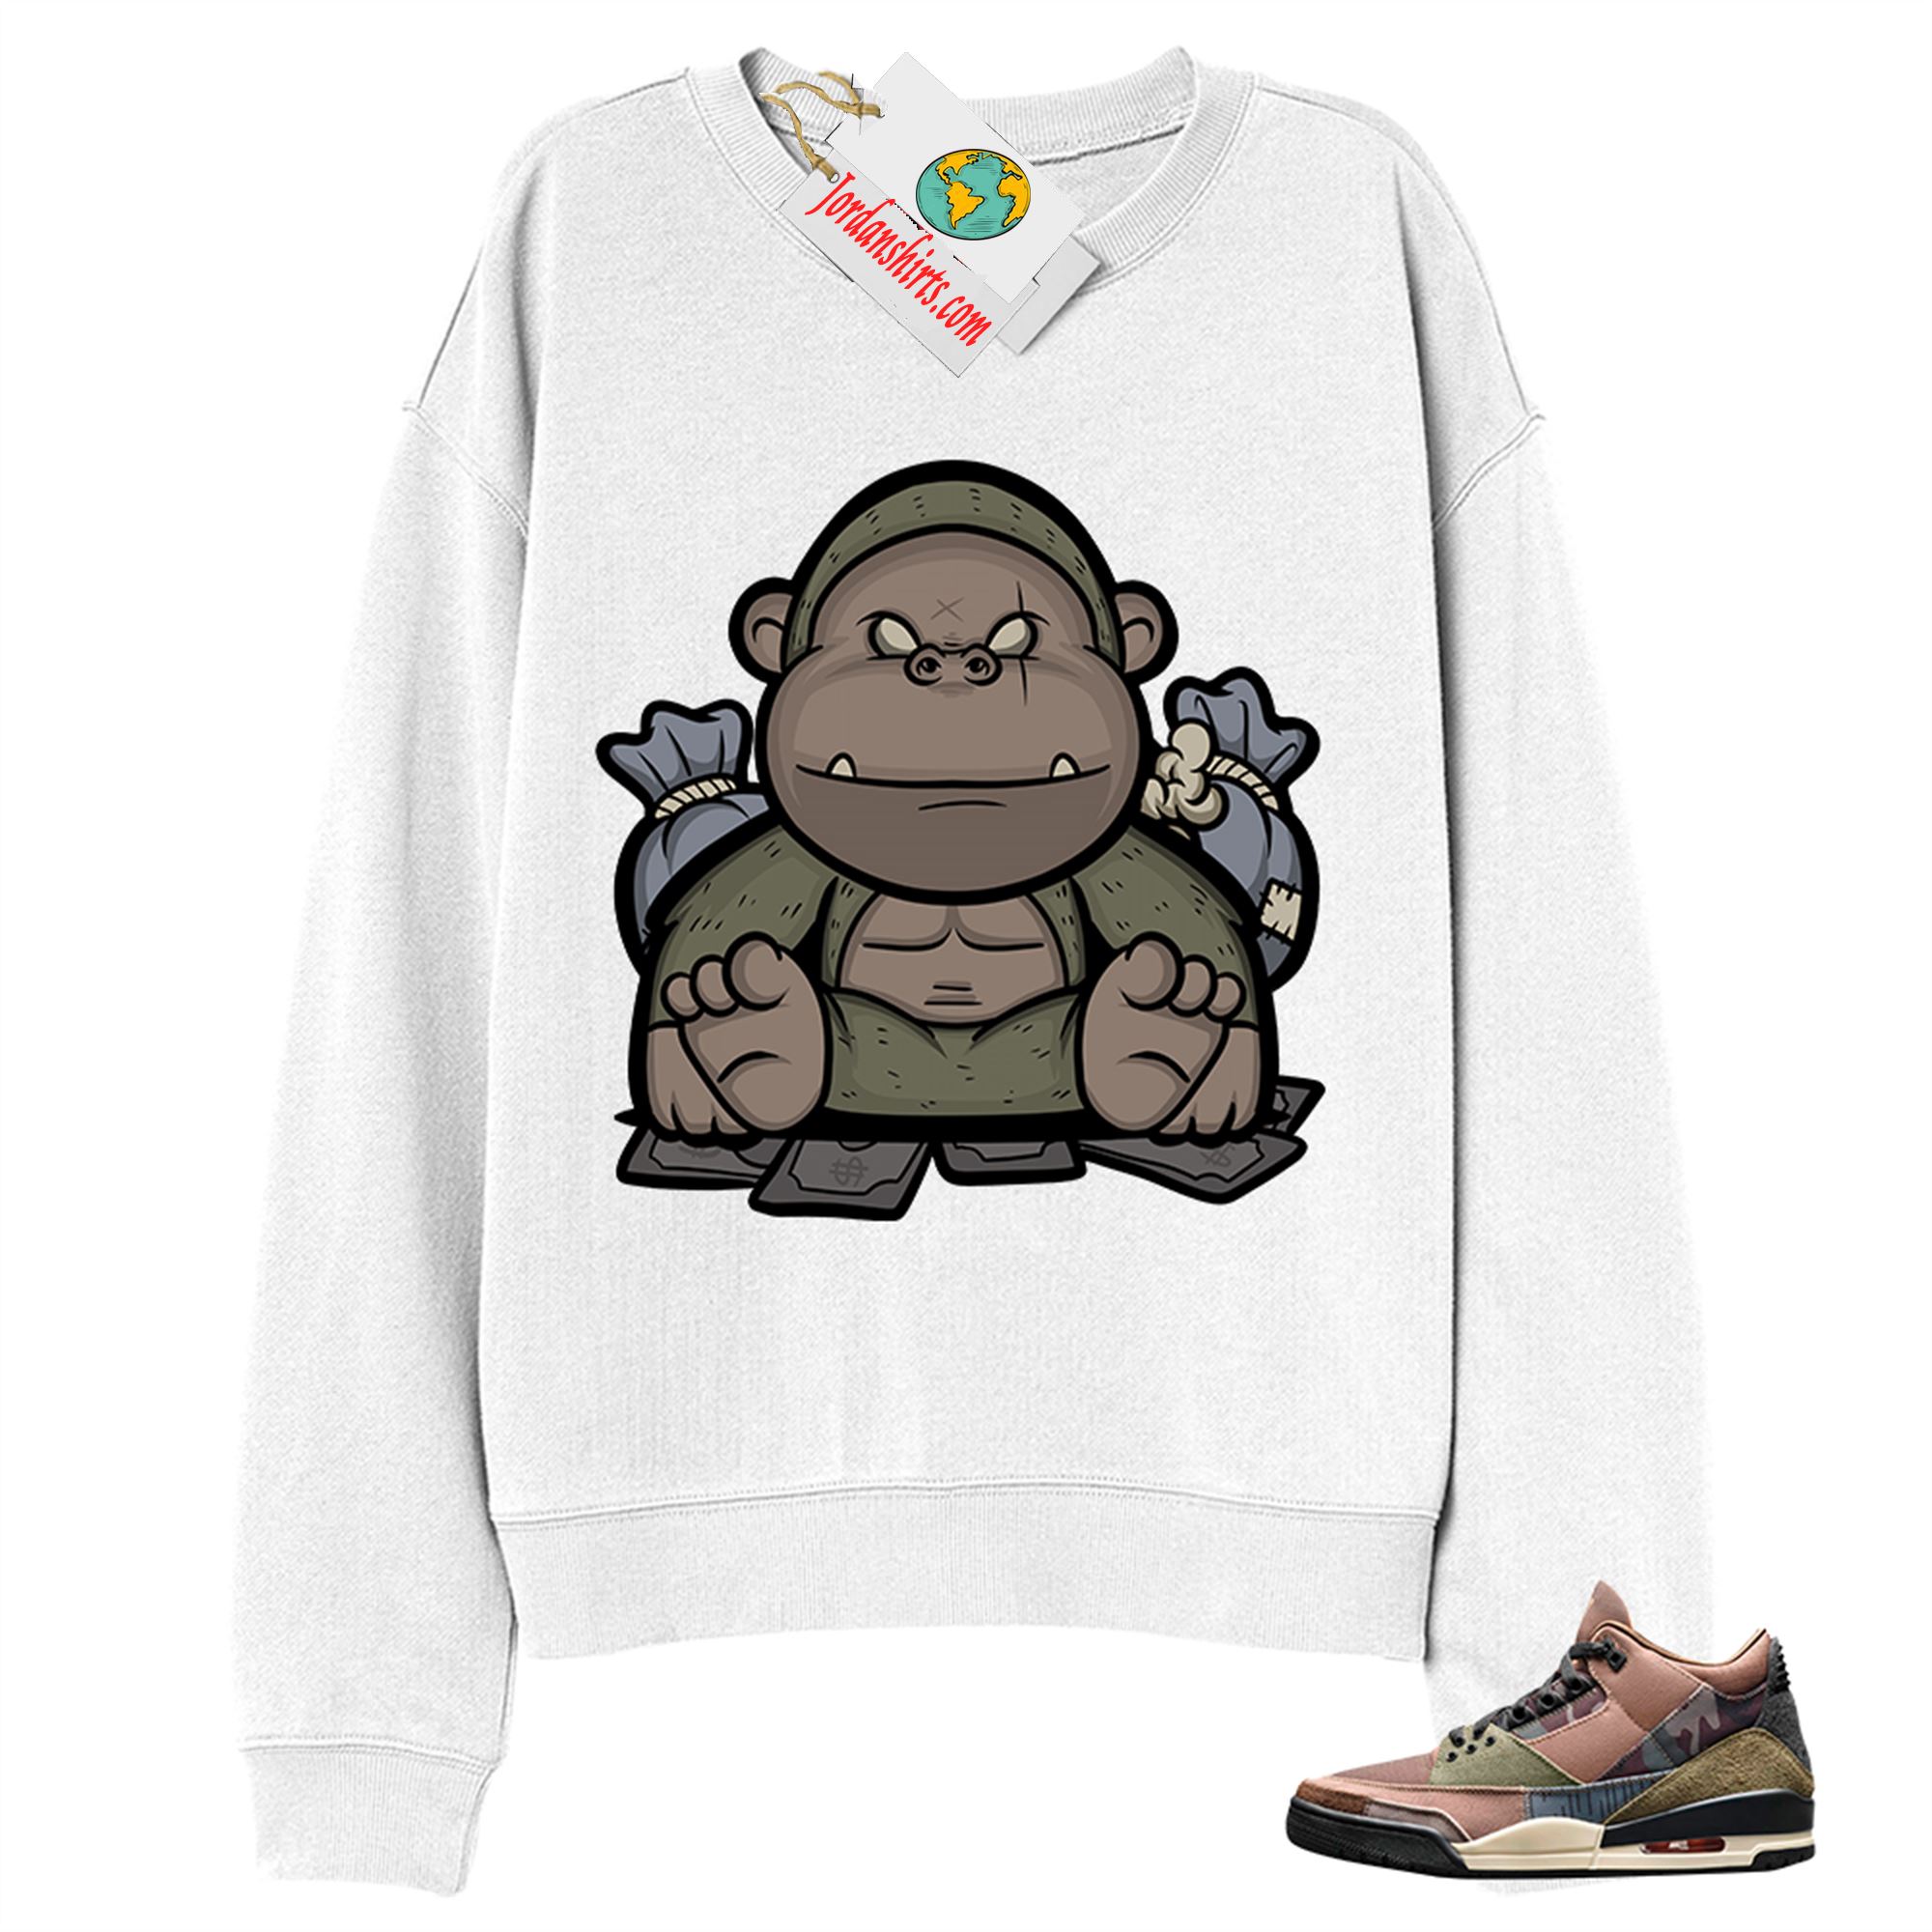 Jordan 3 Sweatshirt, Rich Gorilla With Money White Sweatshirt Air Jordan 3 Camo 3s Size Up To 5xl